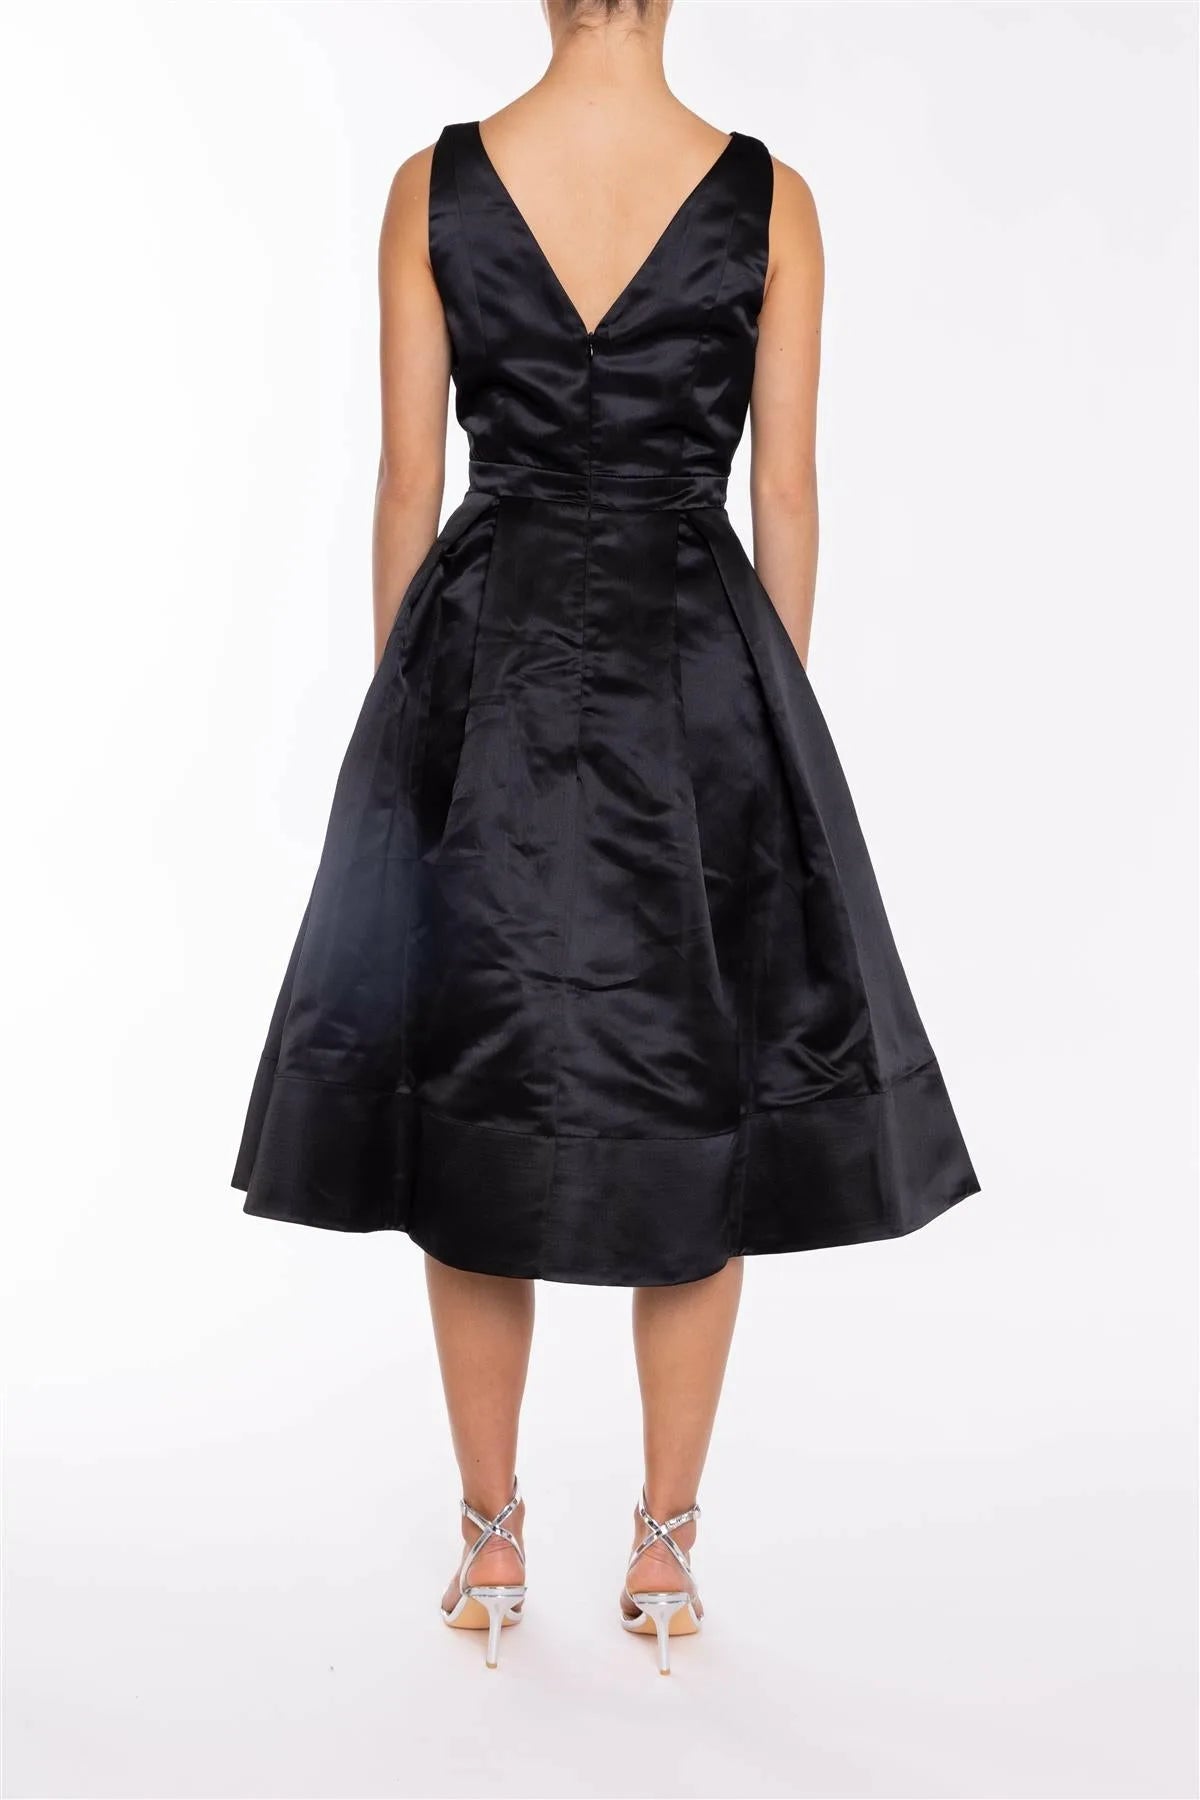 True Decadence Aubrey Black V-Neck Puff Skirt Midi Dress